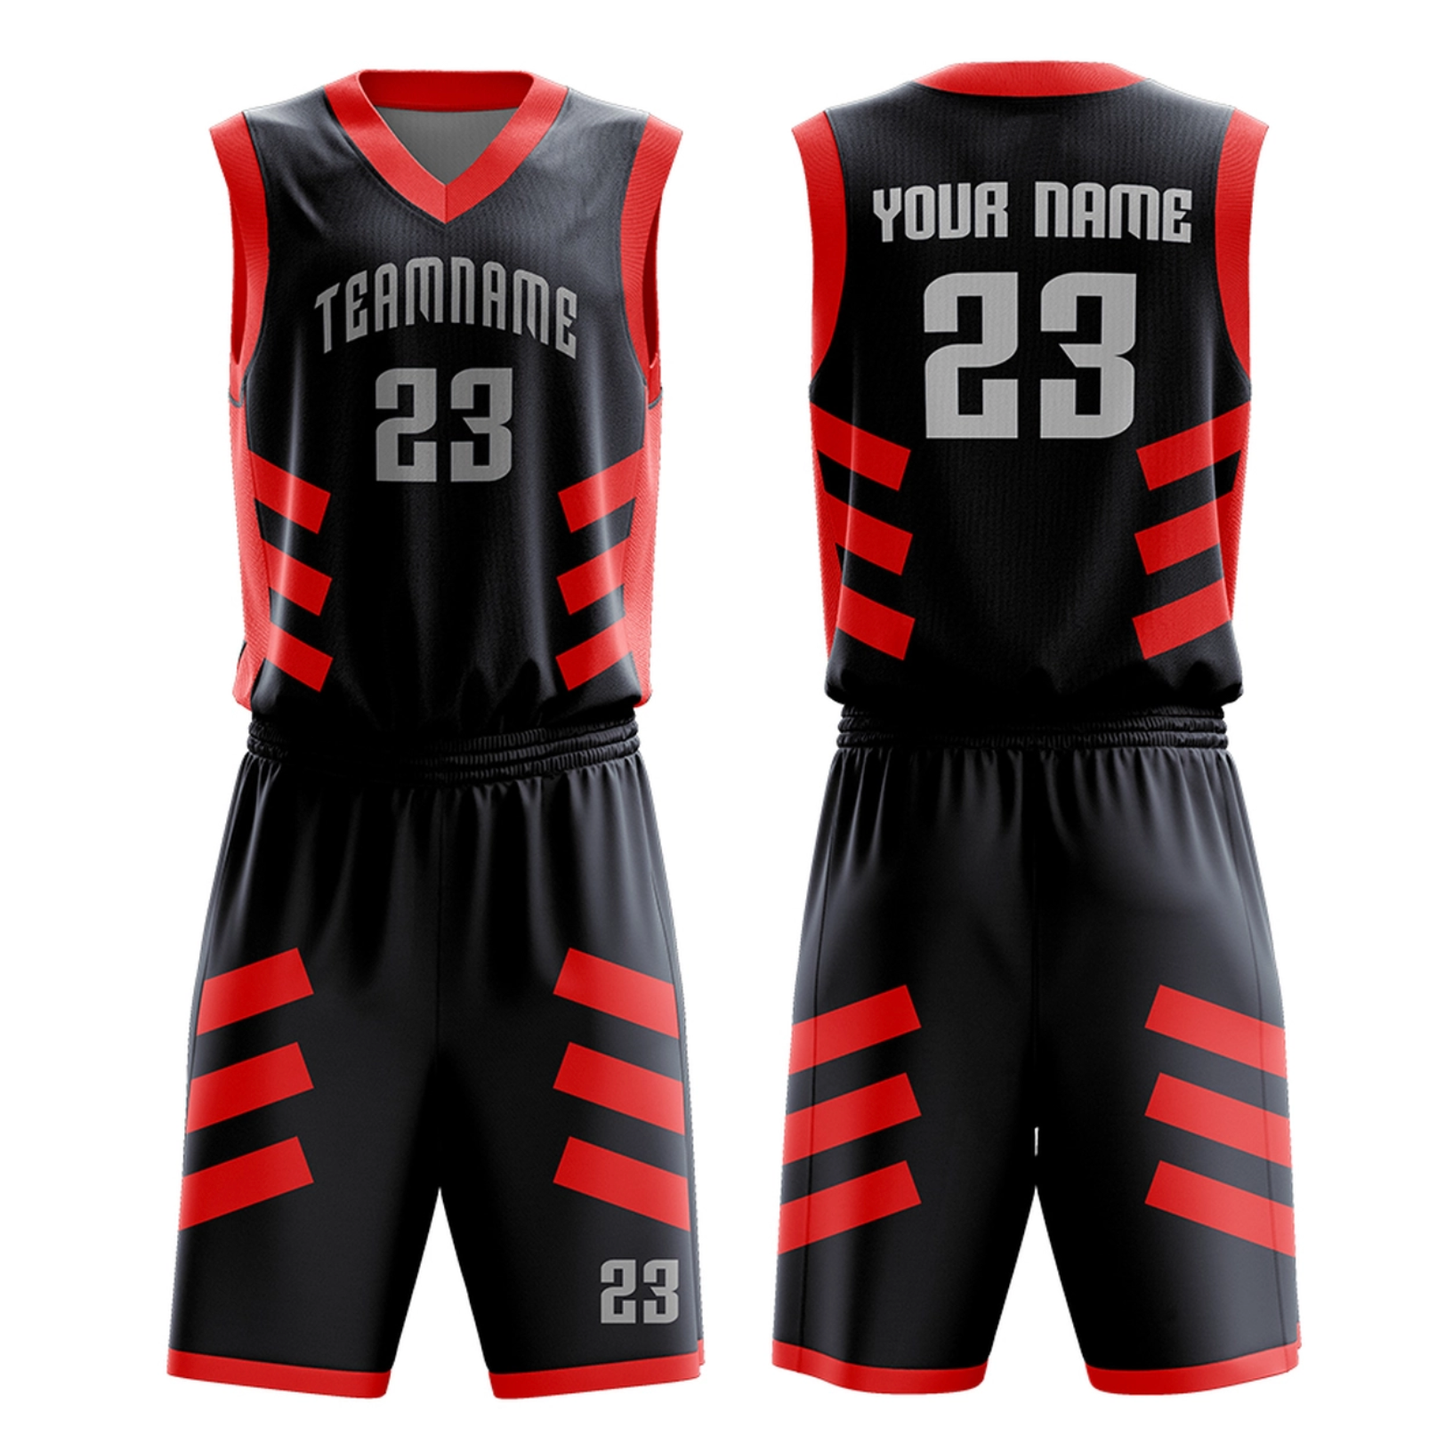 Custom Basketball Uniform - Made in America